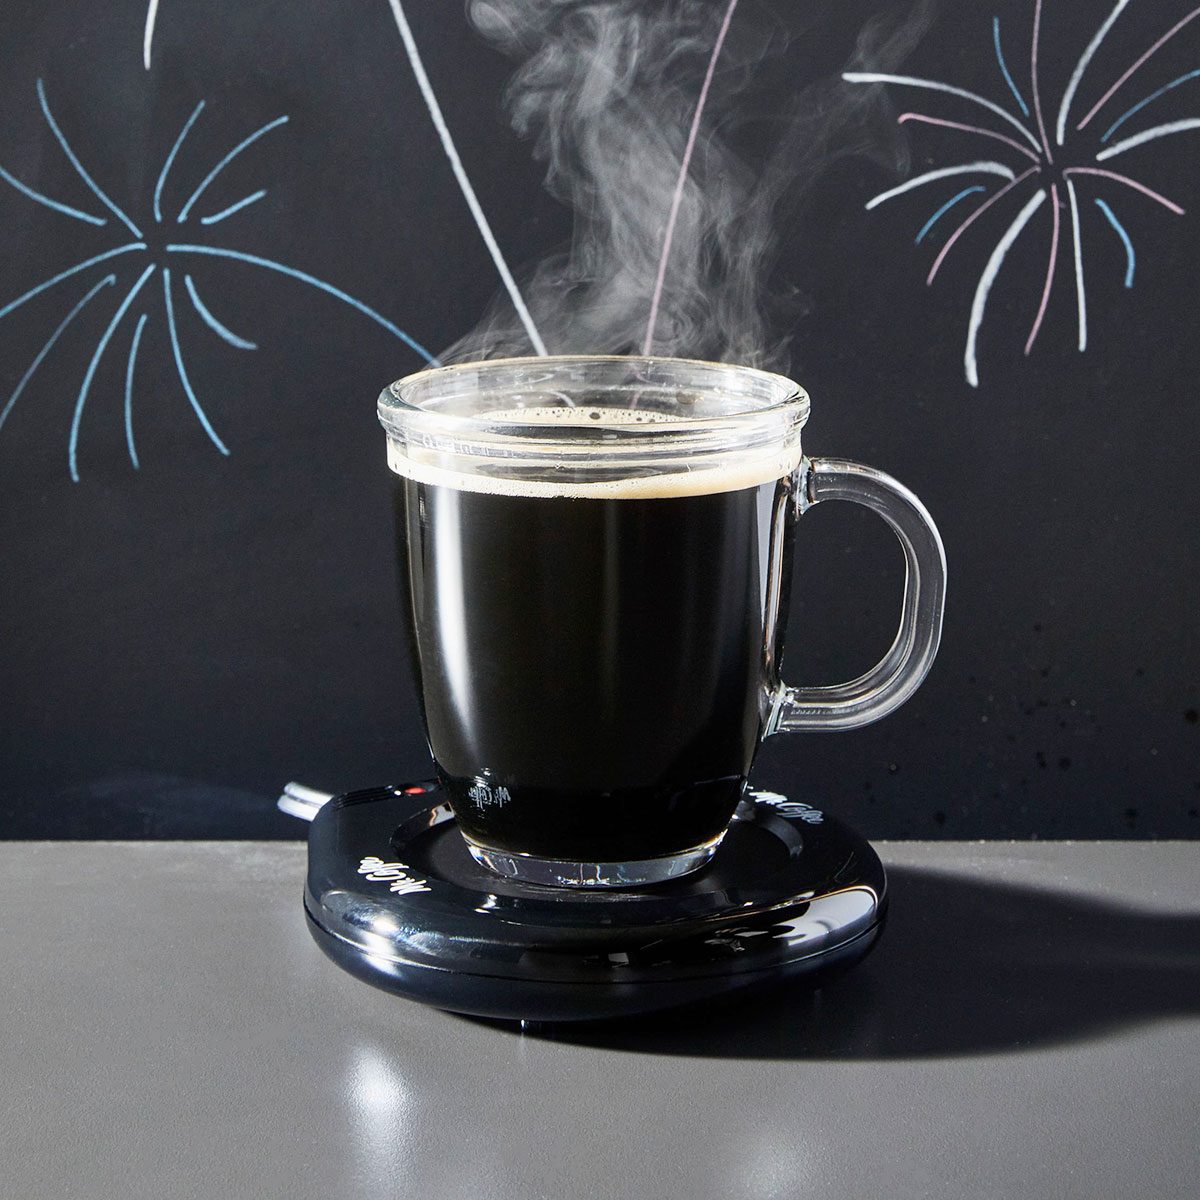 Cup warmer review, Mug warmer review, coffee / tea mug warmer